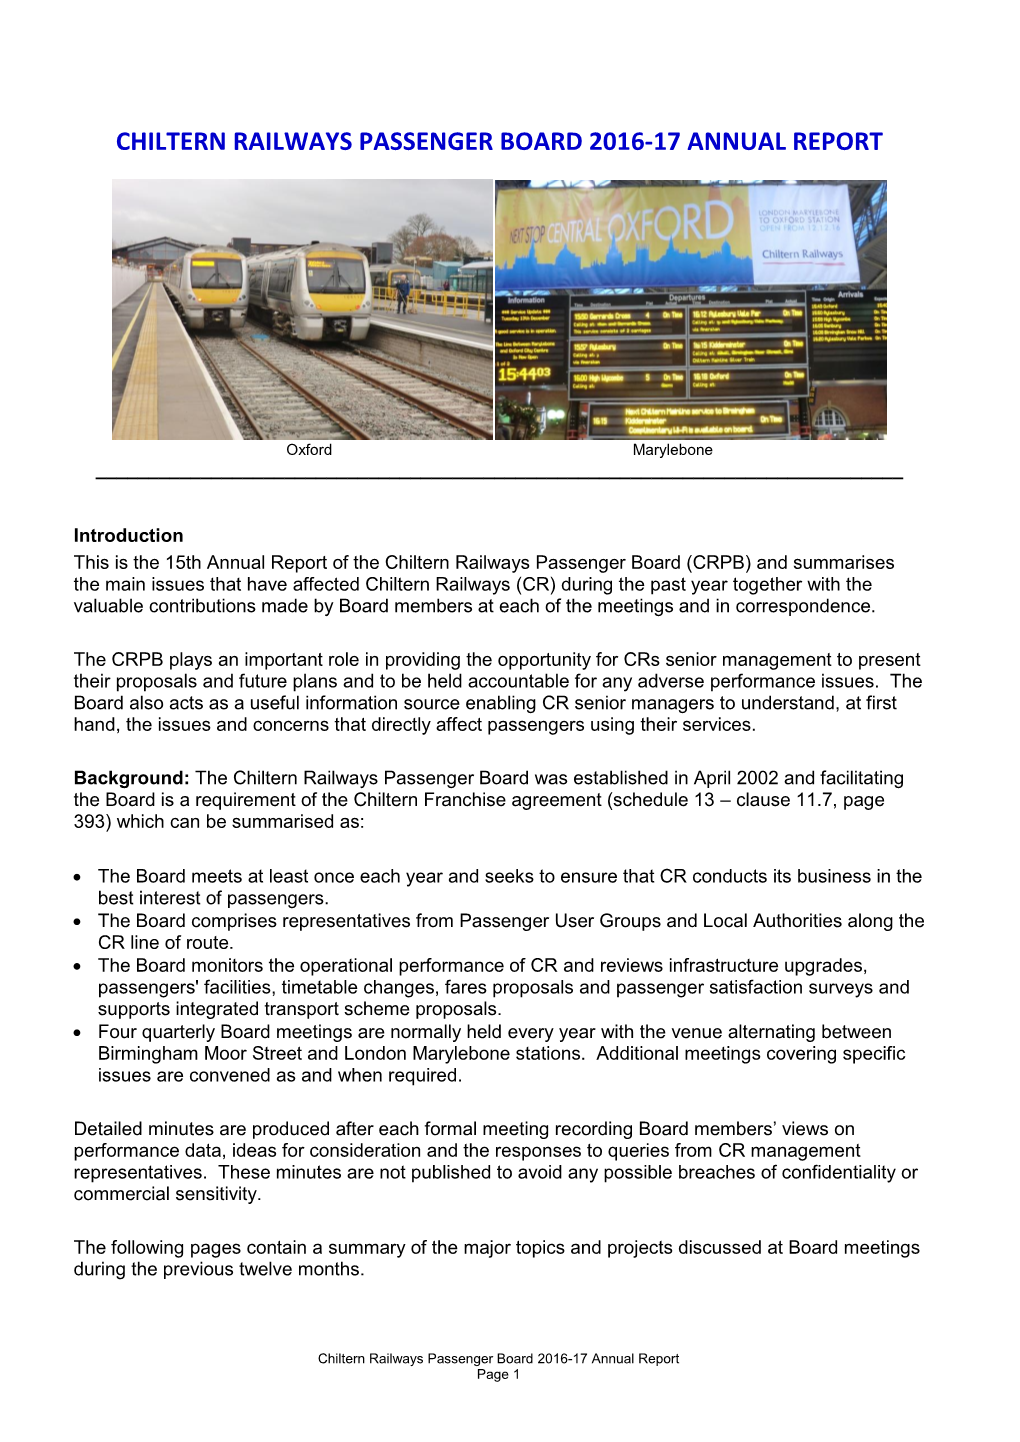 Chiltern Railways Passenger Board 2016-17 Annual Report